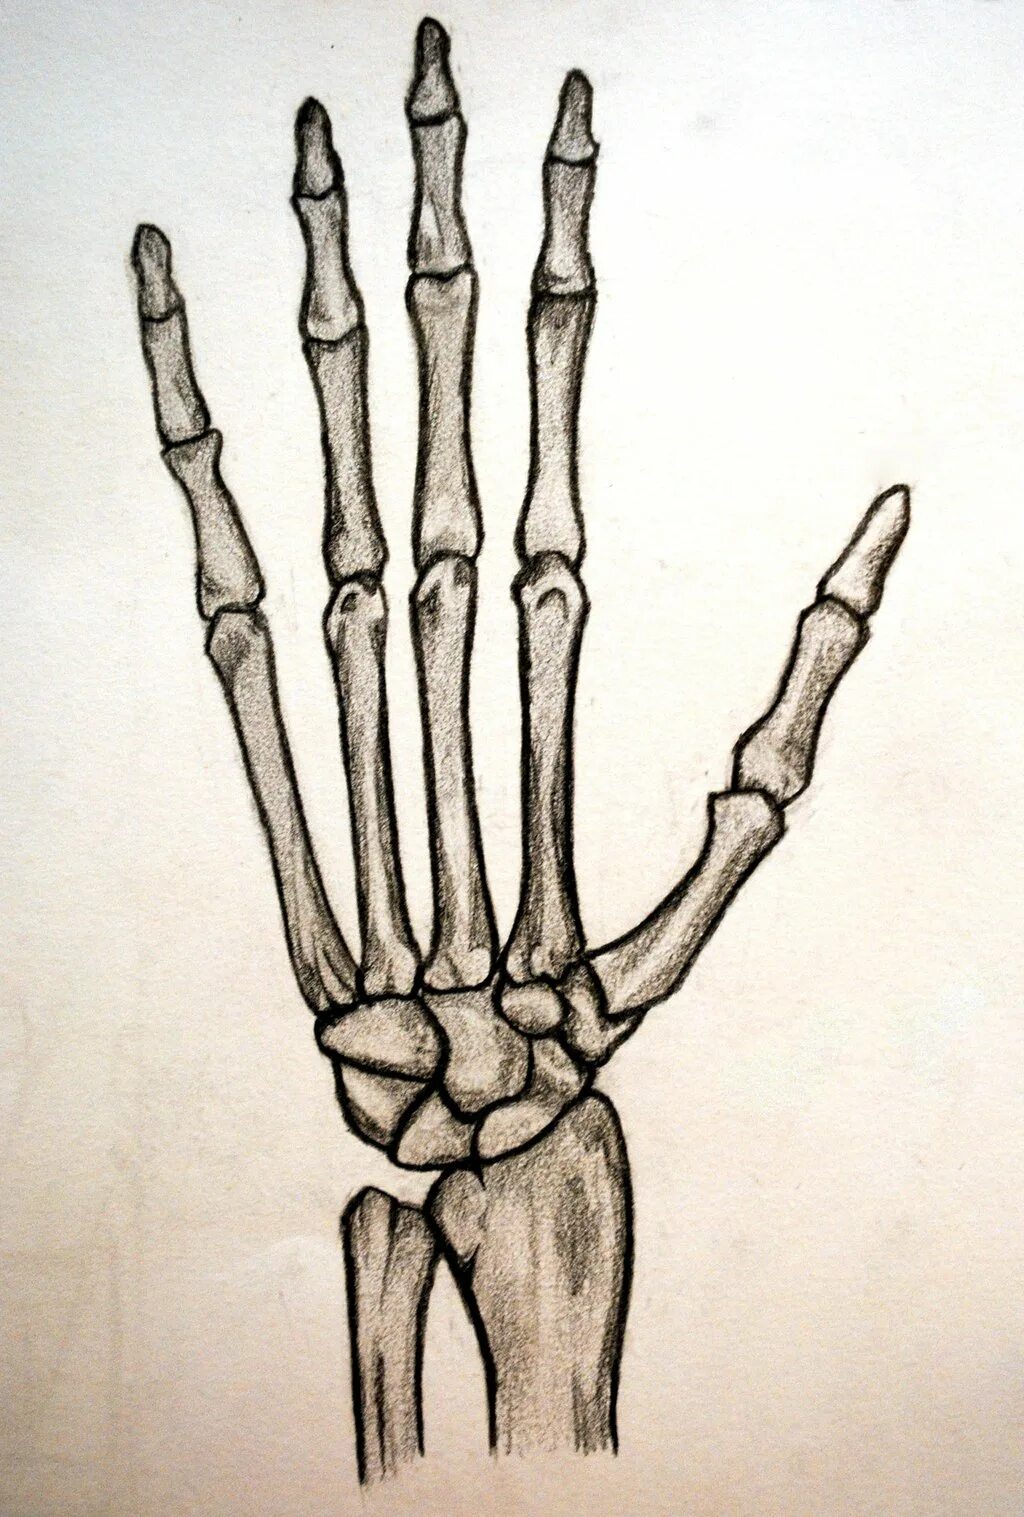 Скелет кисти человека. Скелет руки. Тату скелет на руке кисть. Скелет запястья человека